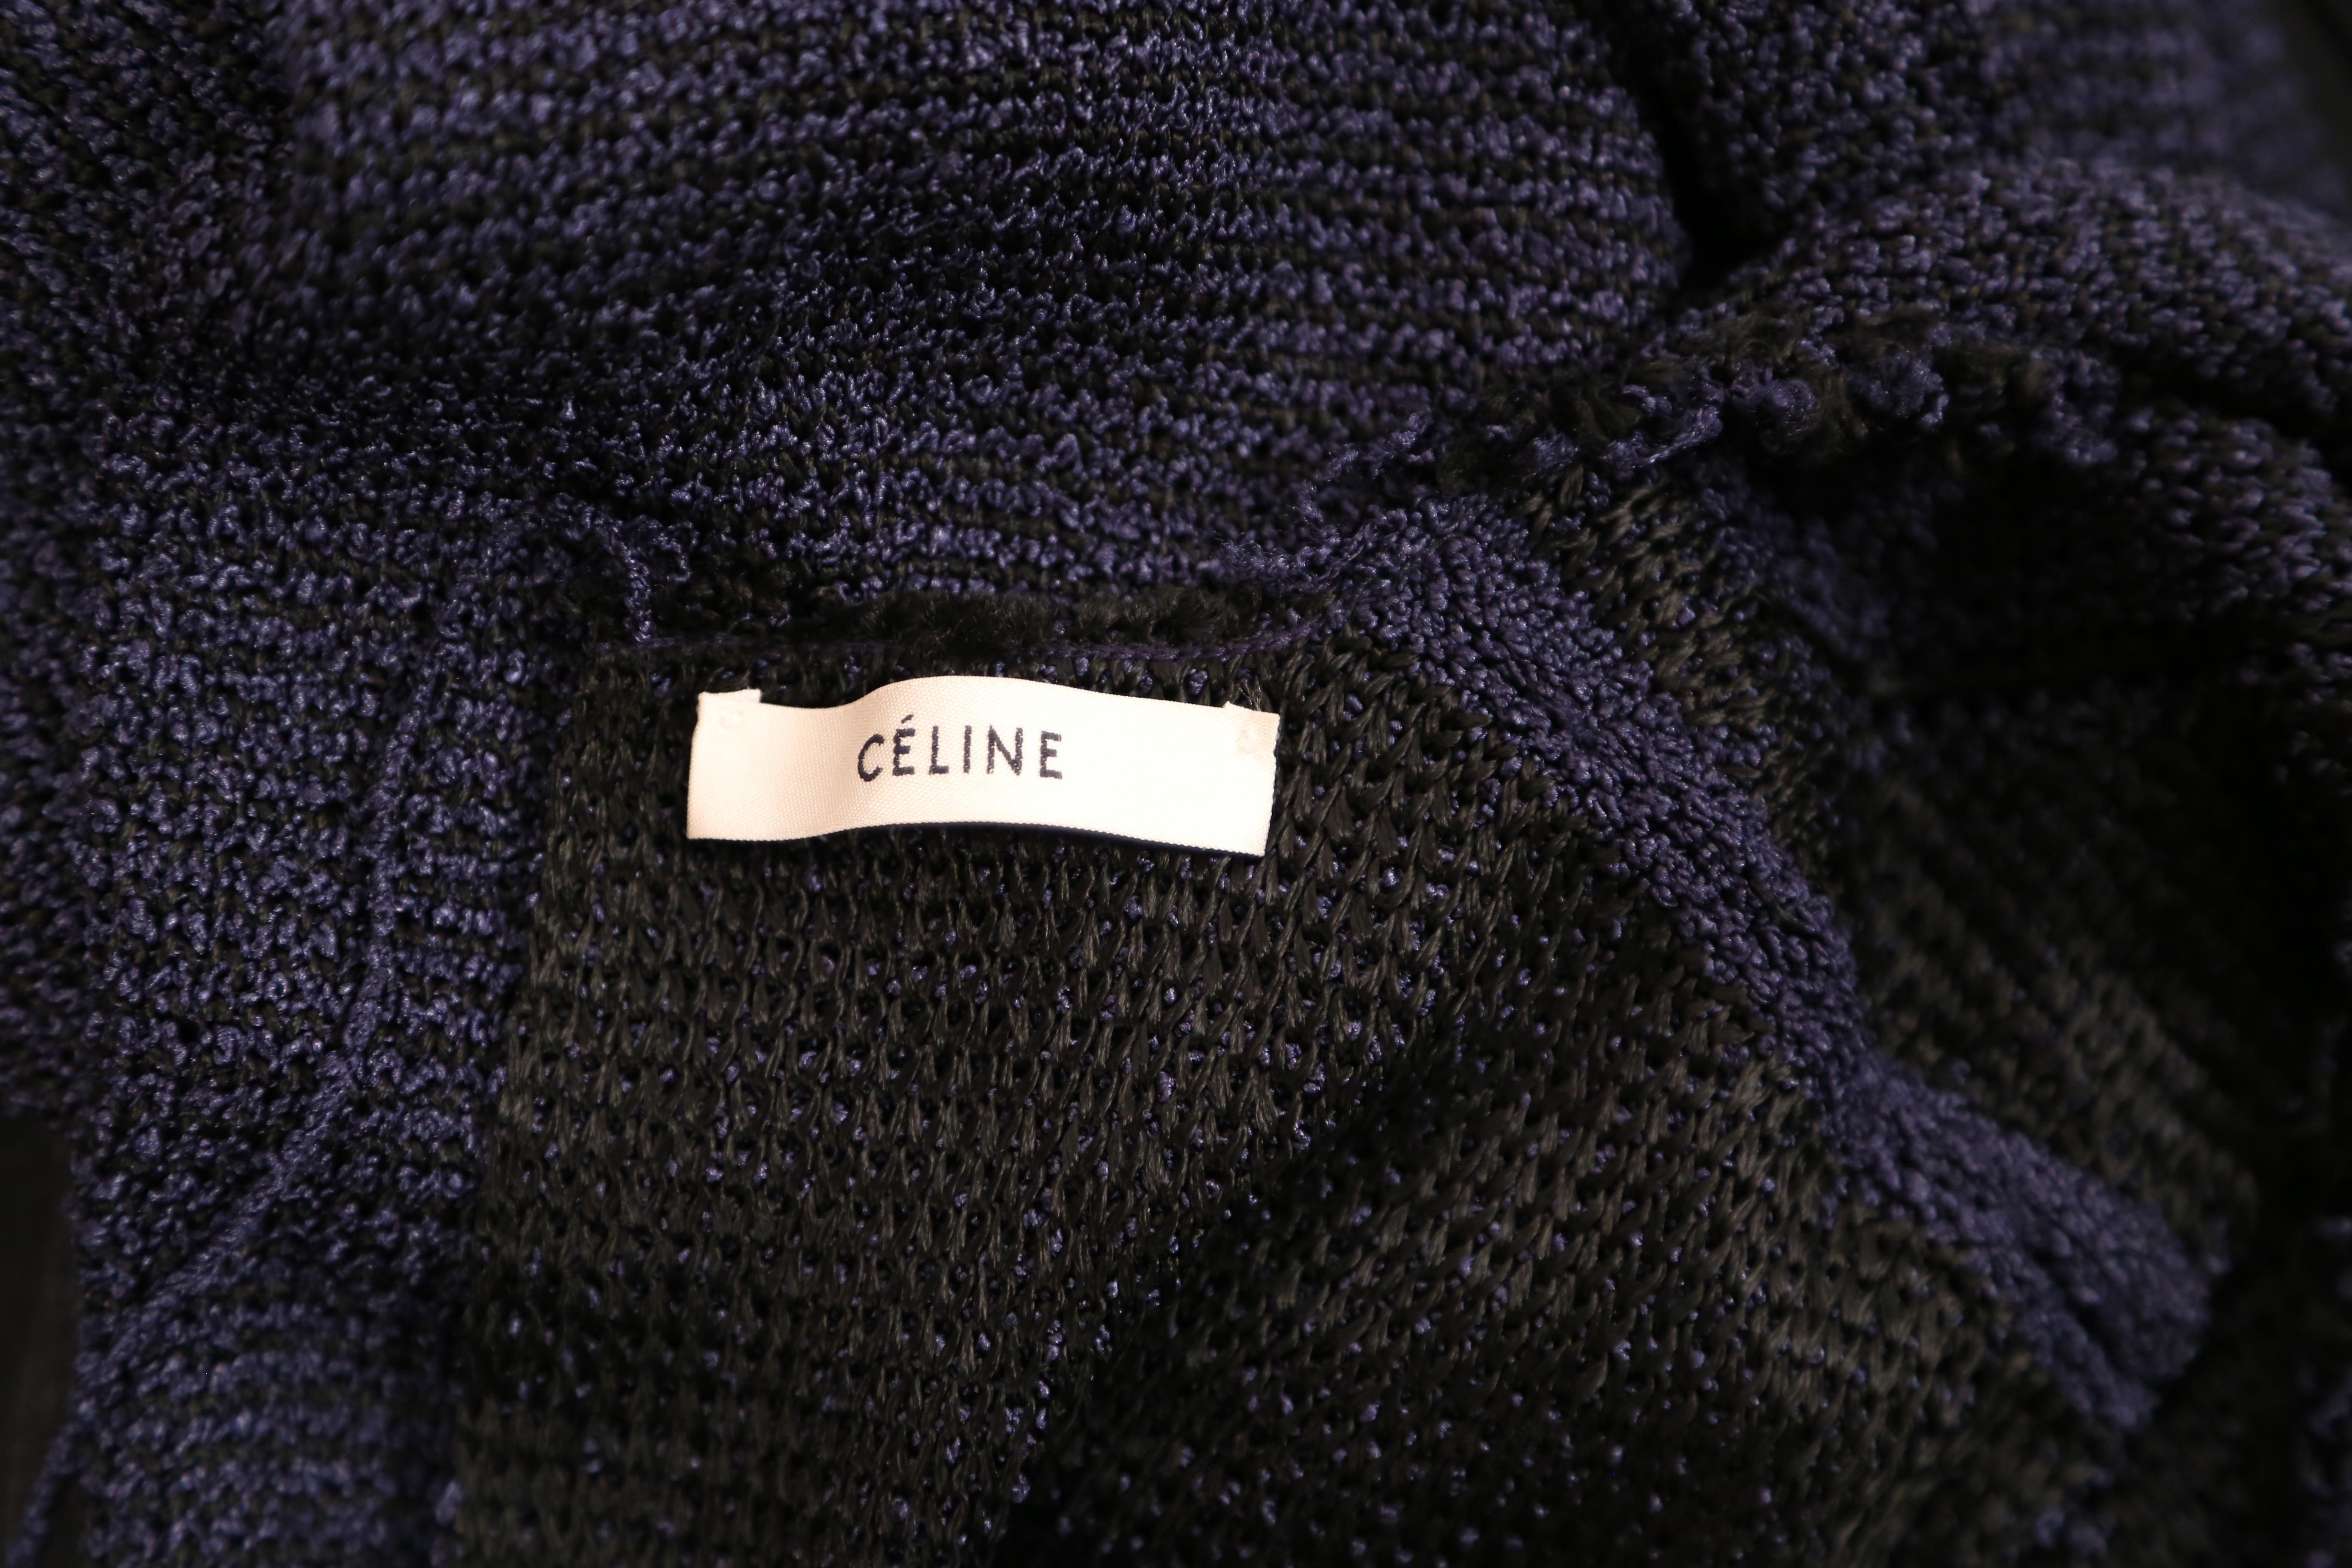 CELINE by PHOEBE PHILO navy and black knit dress 1